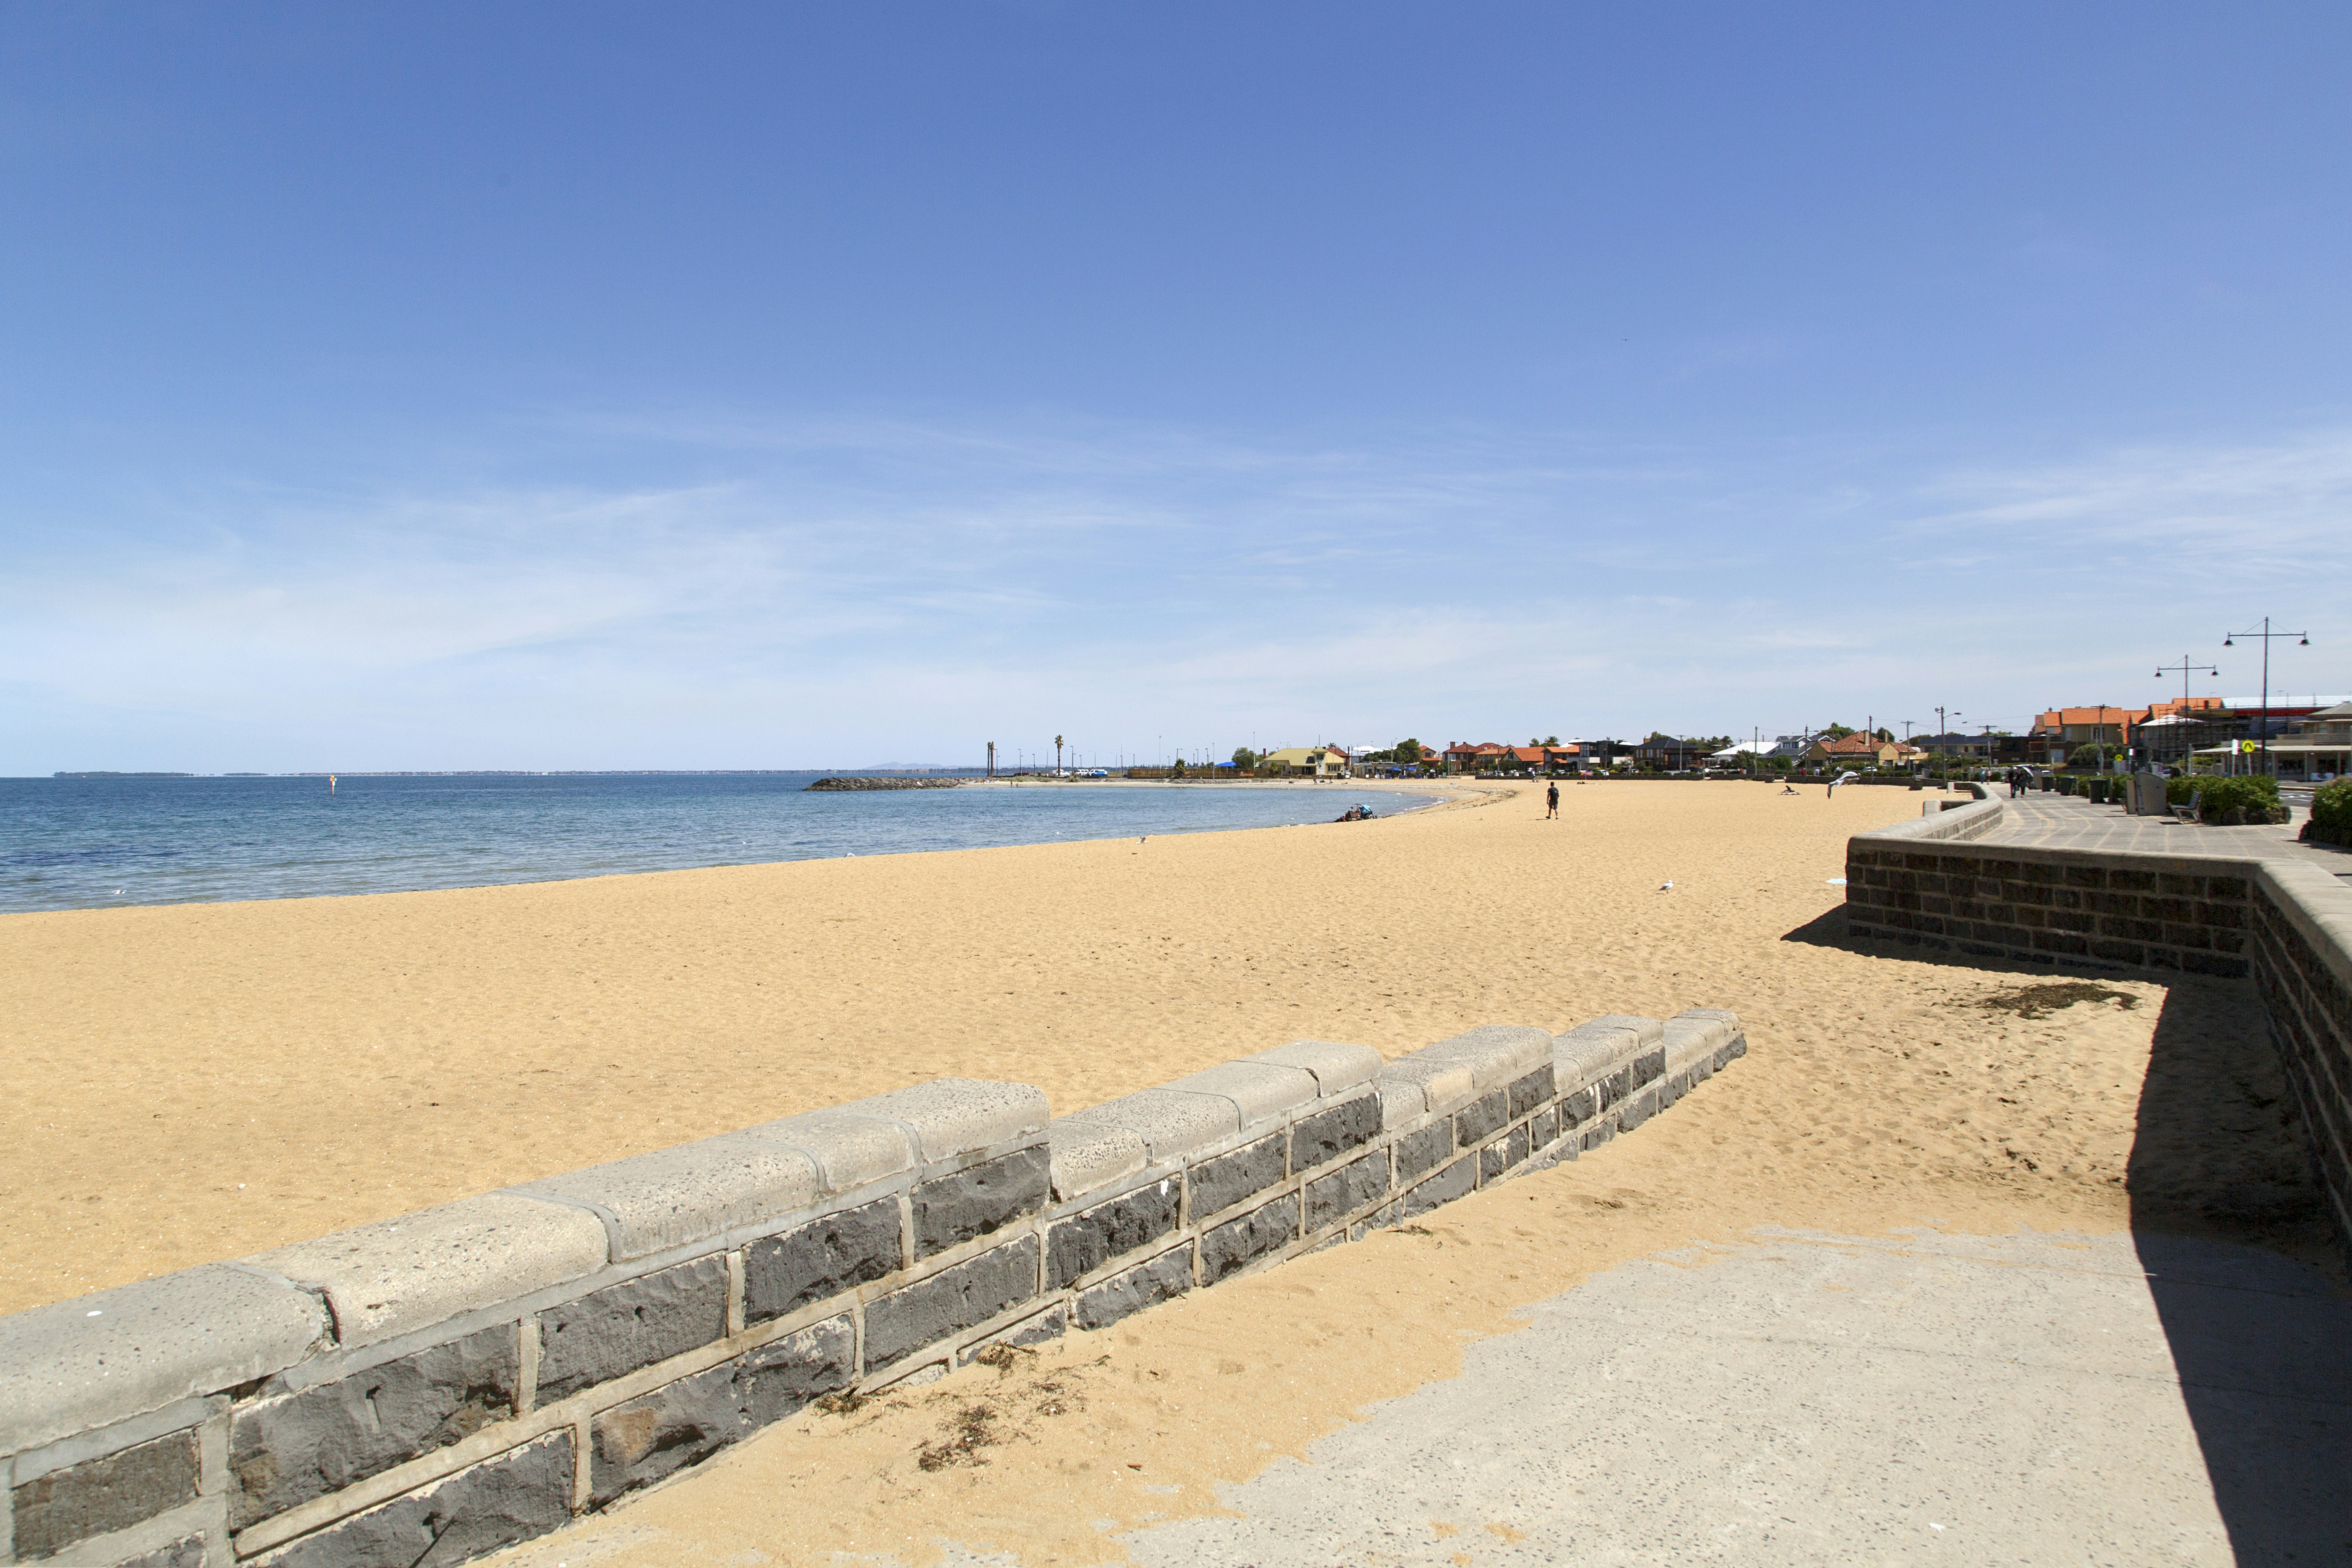 Williamstown Beach in Melbourne. A vast segment of white sand curving round the headland.